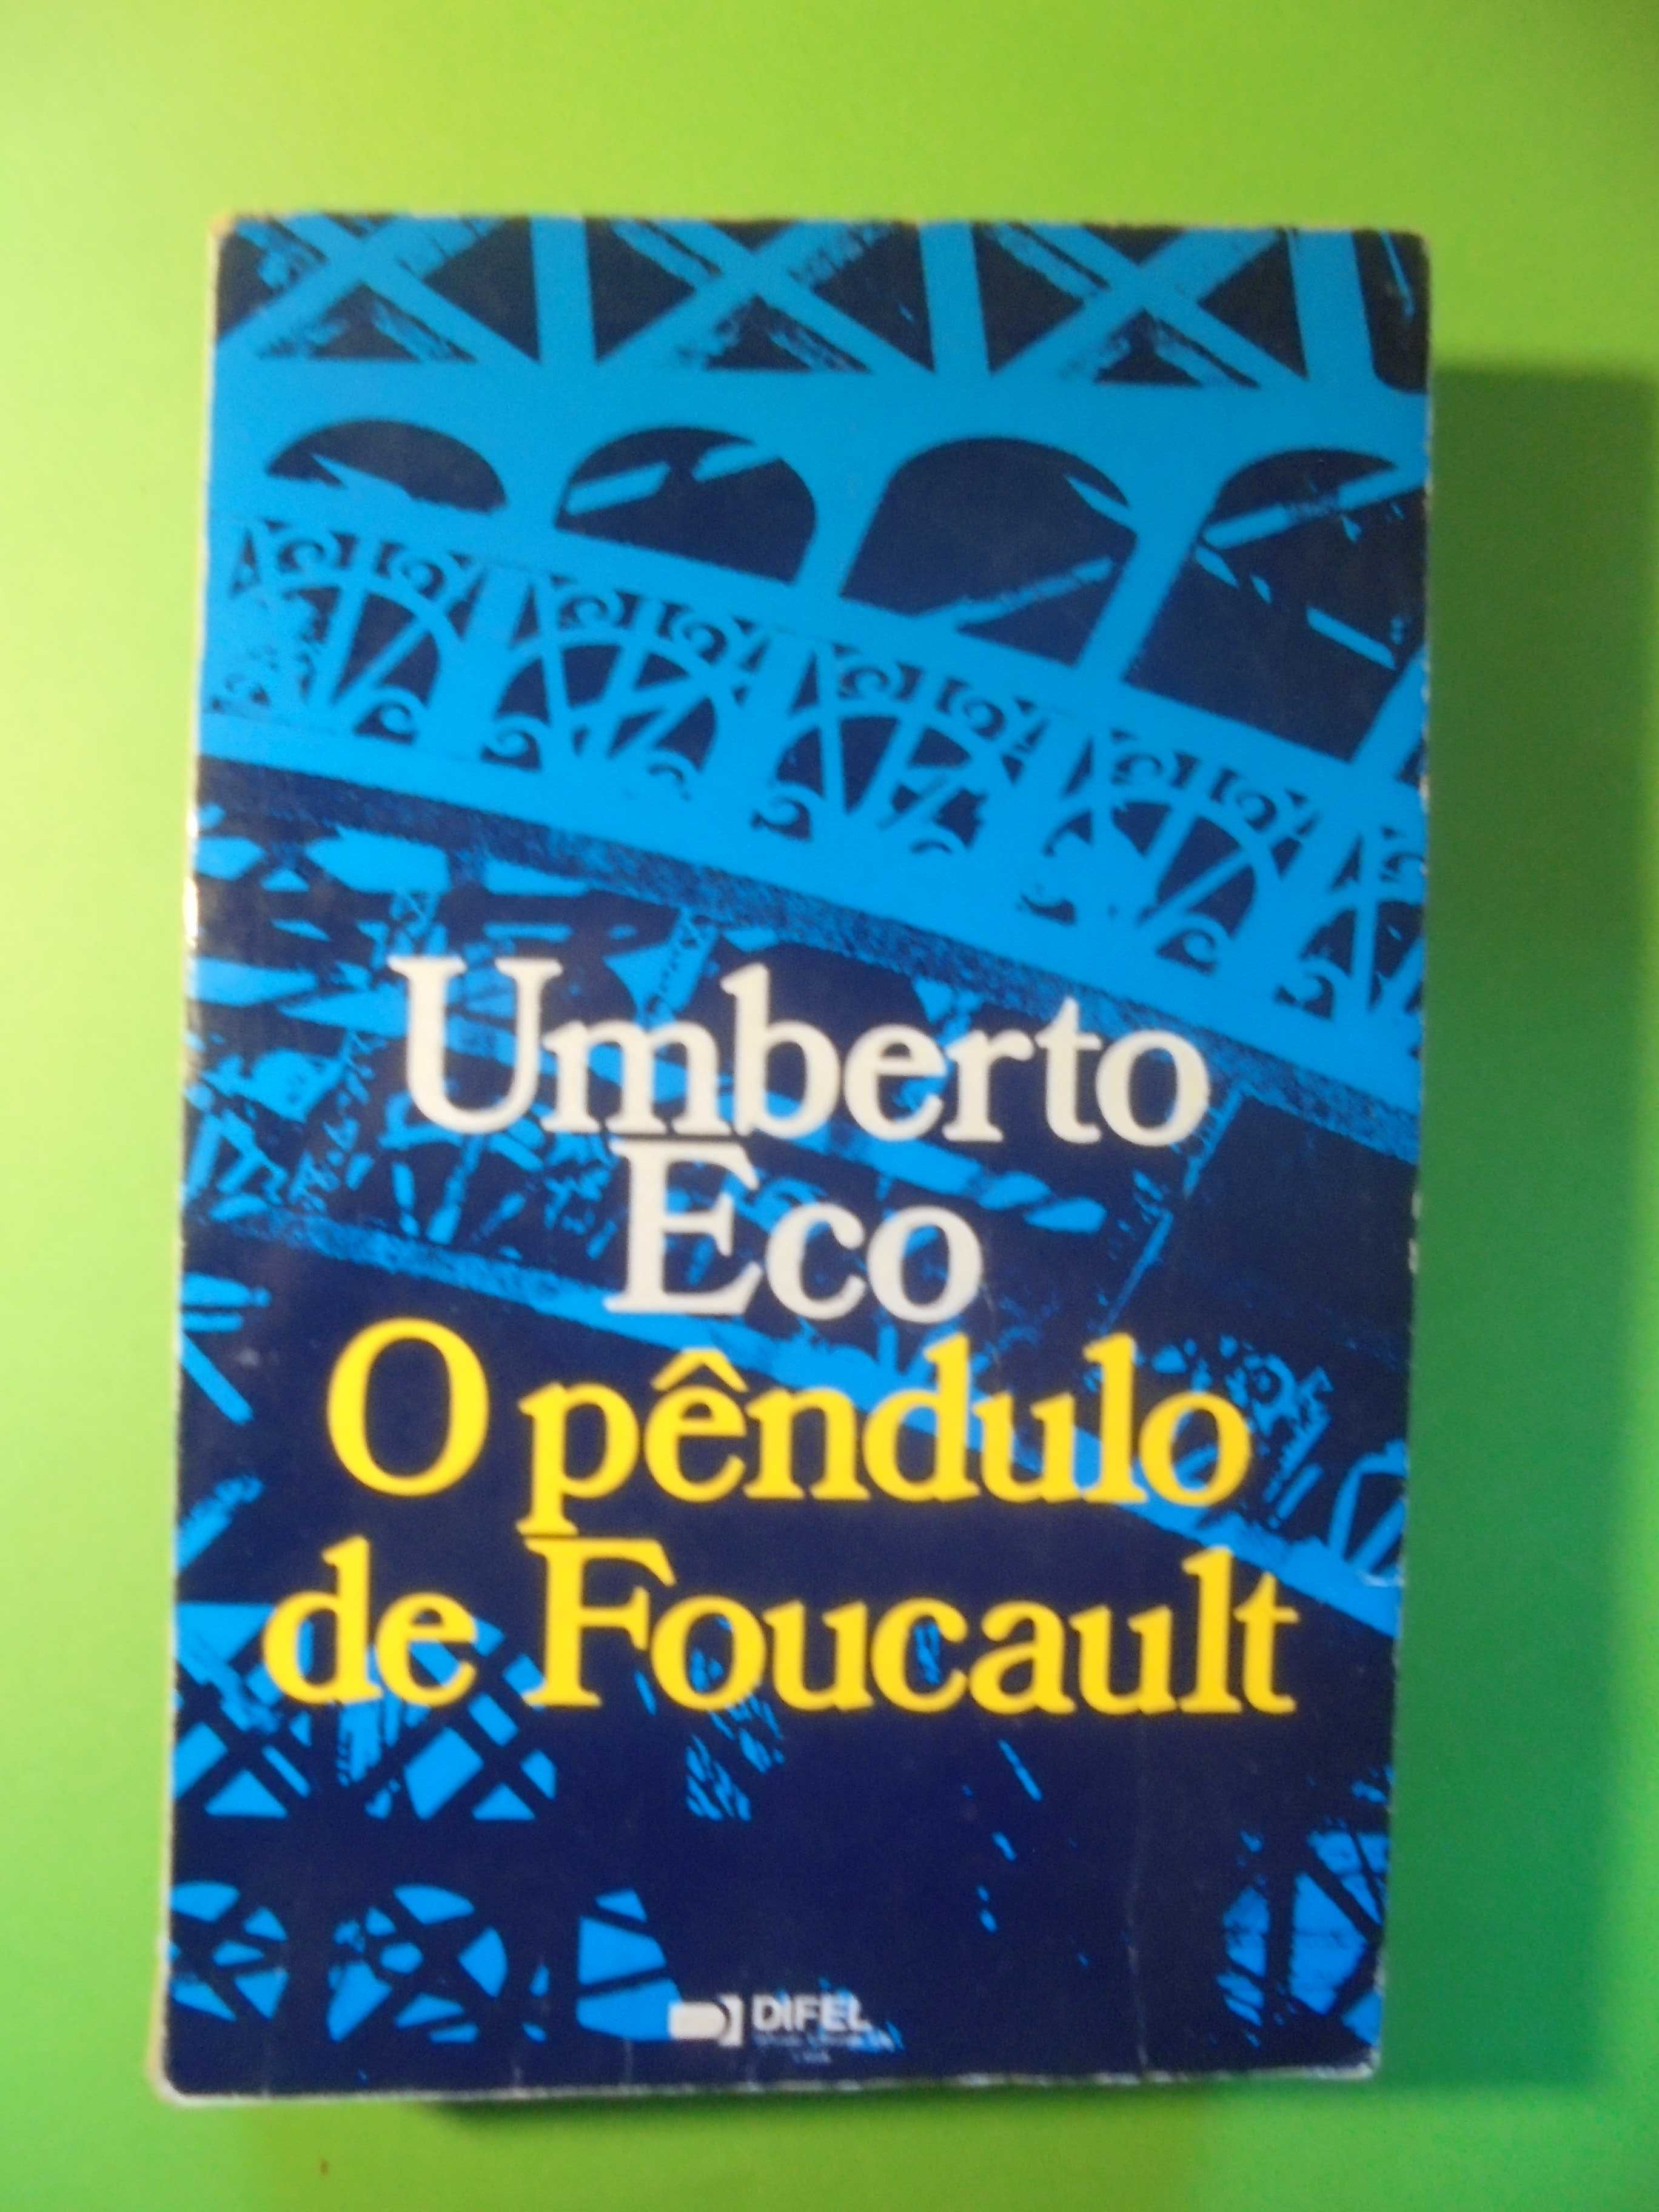 Eco (Humberto);O Pêndulo de Foucault